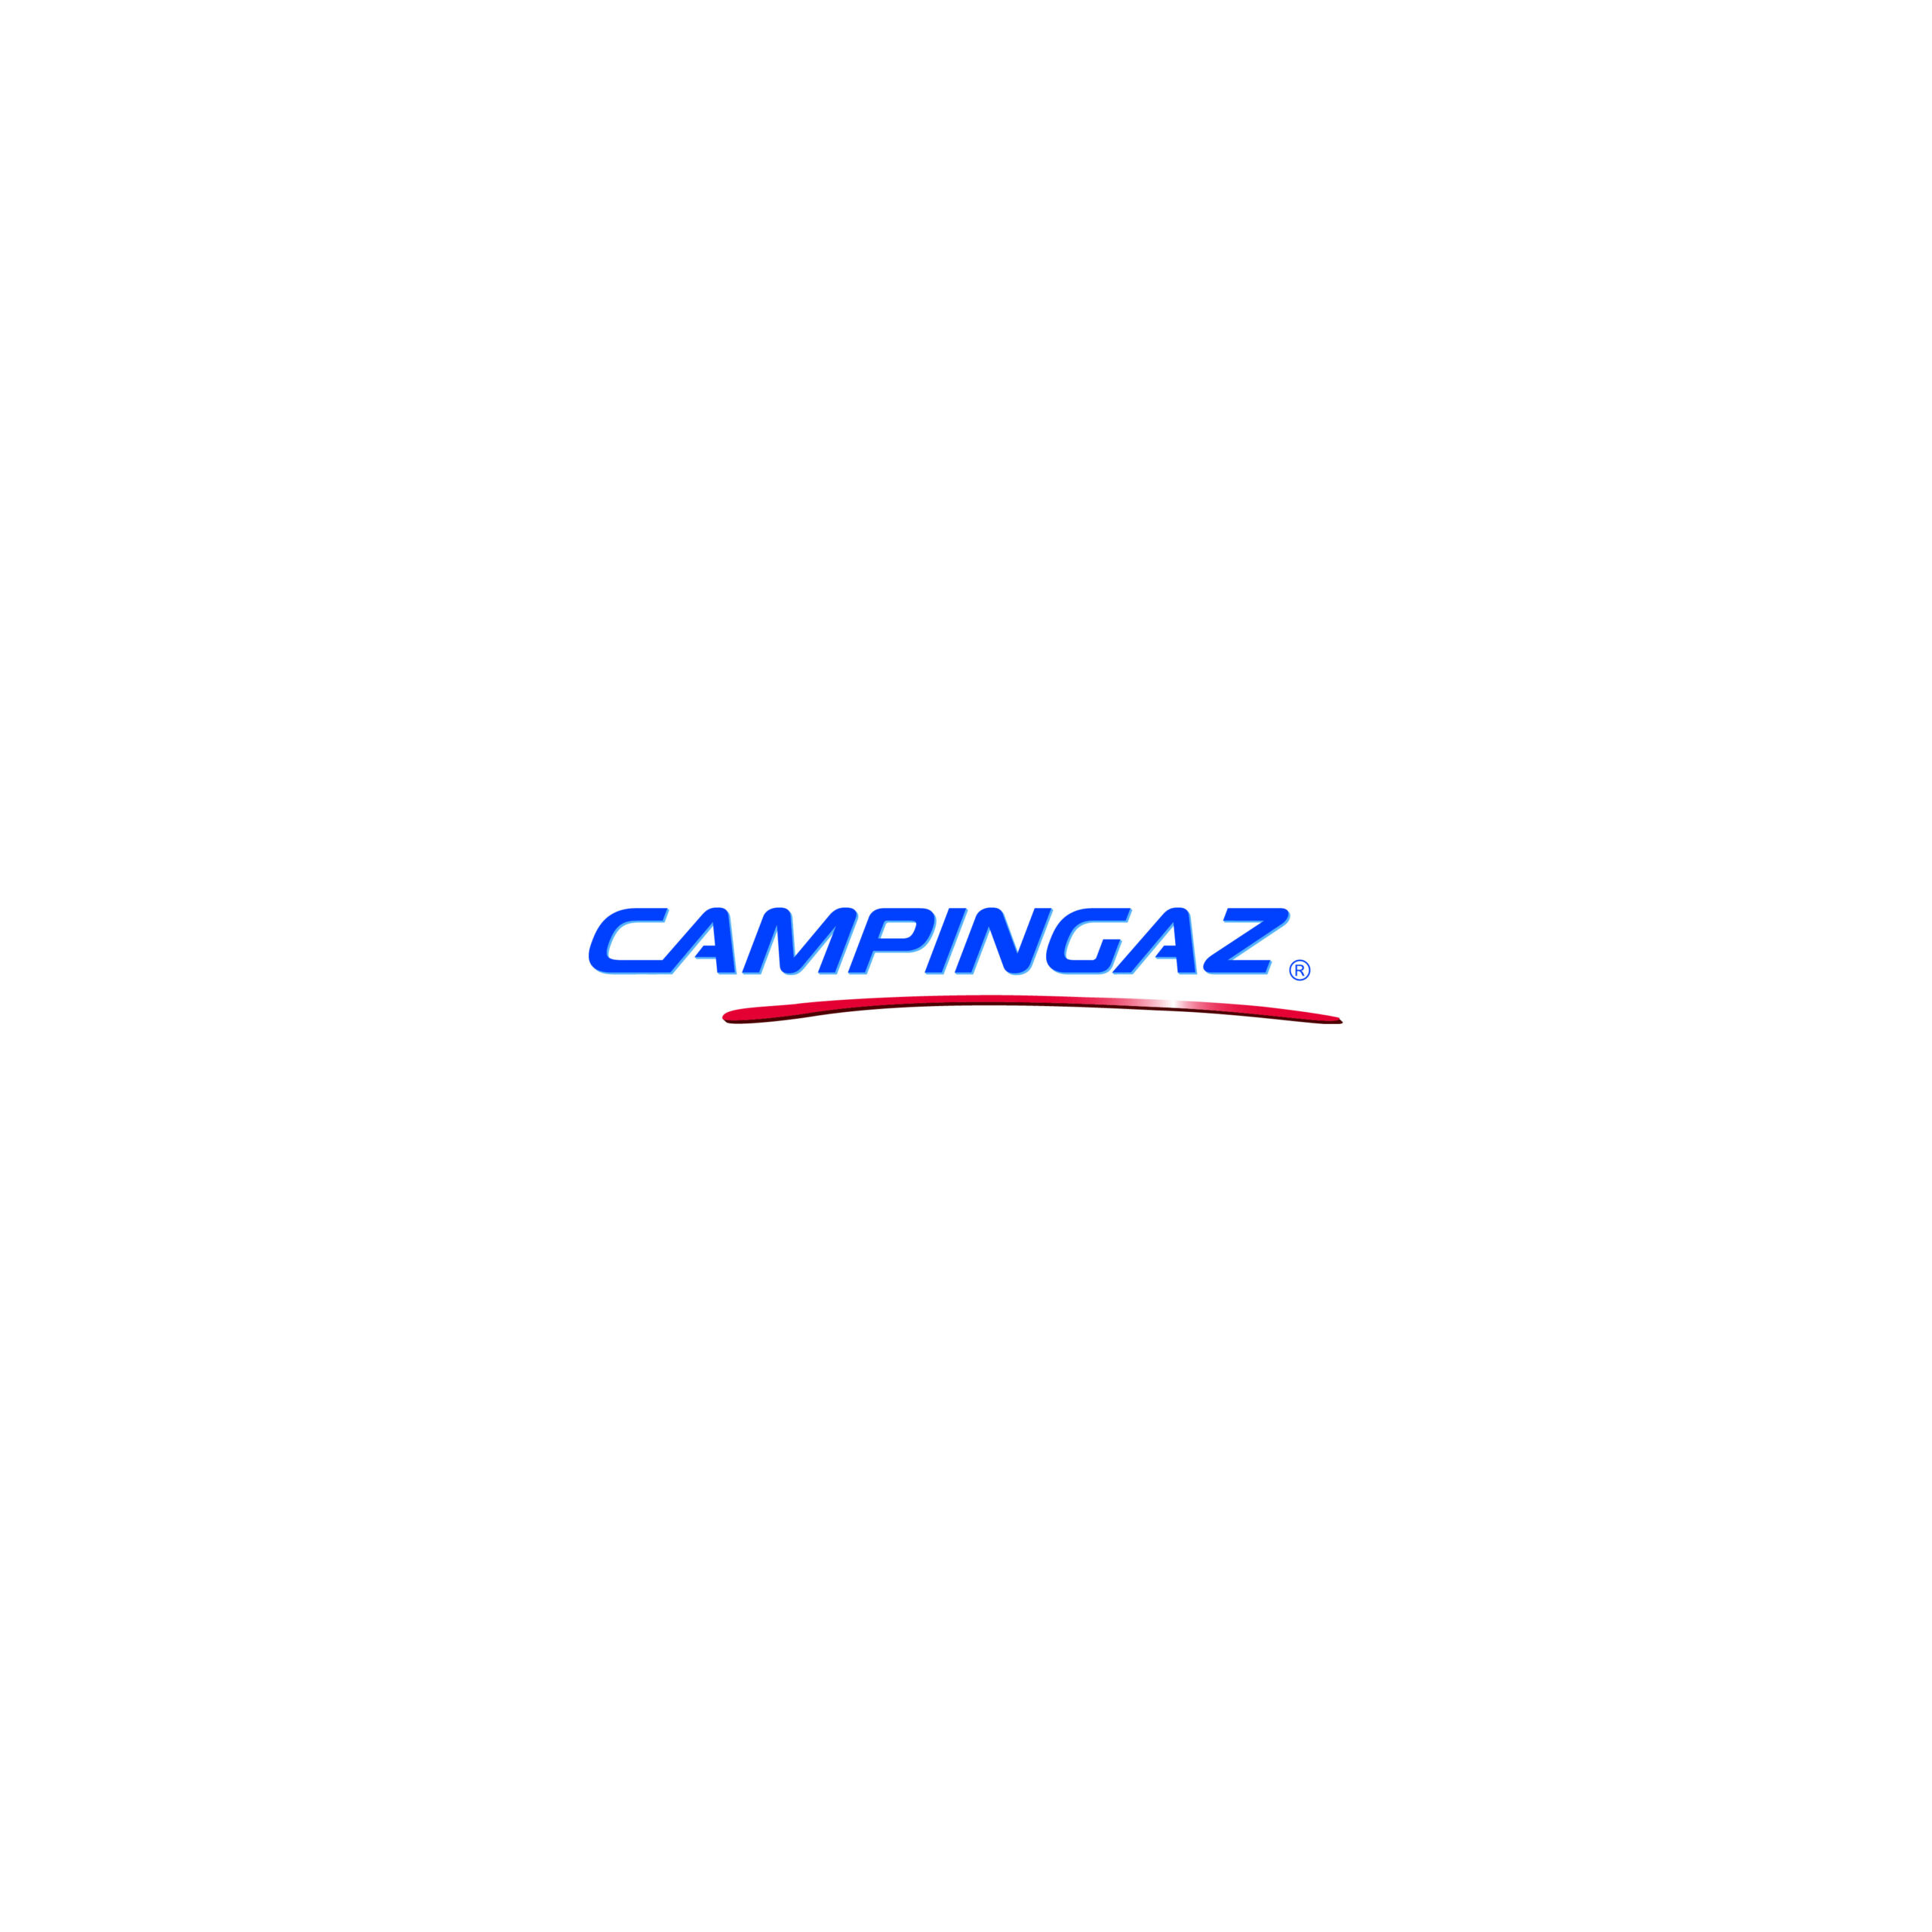 Campingaz_New 2010_1_HR